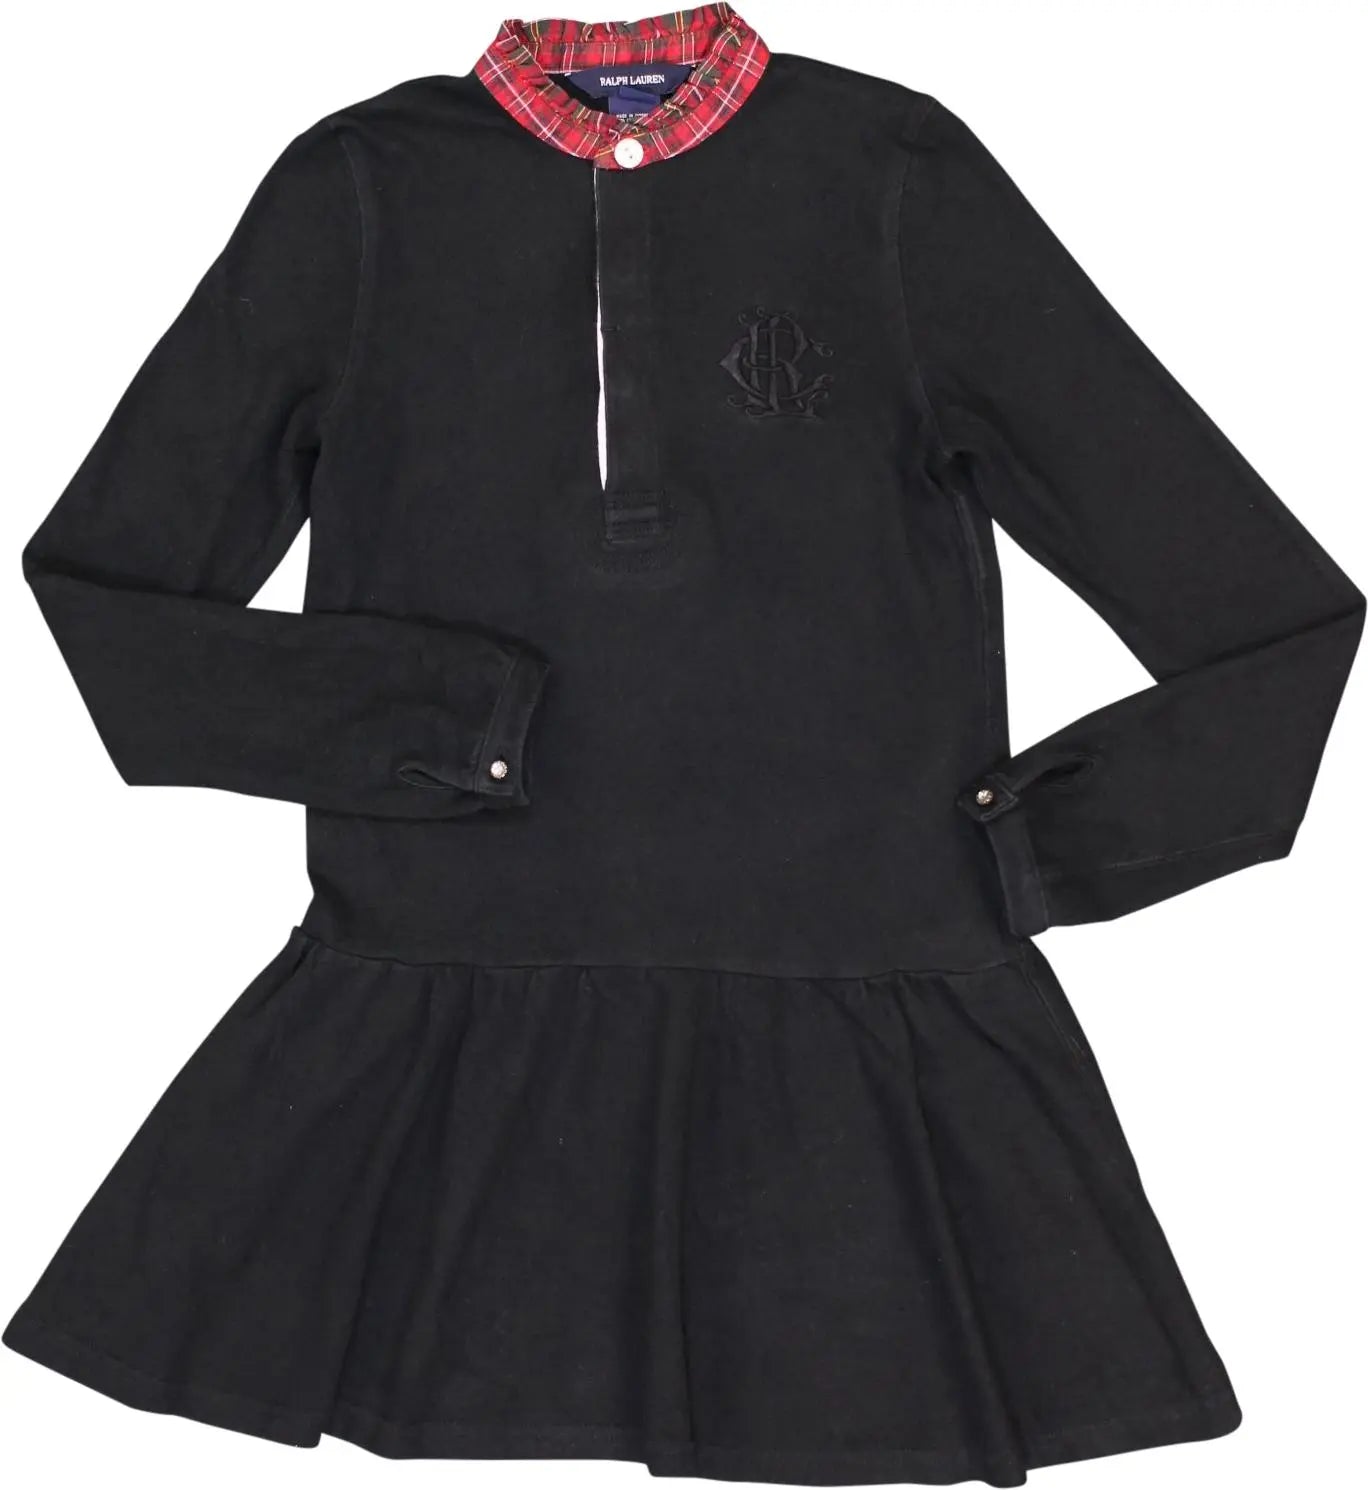 Ralph Lauren - Black Dress by Ralph Lauren- ThriftTale.com - Vintage and second handclothing